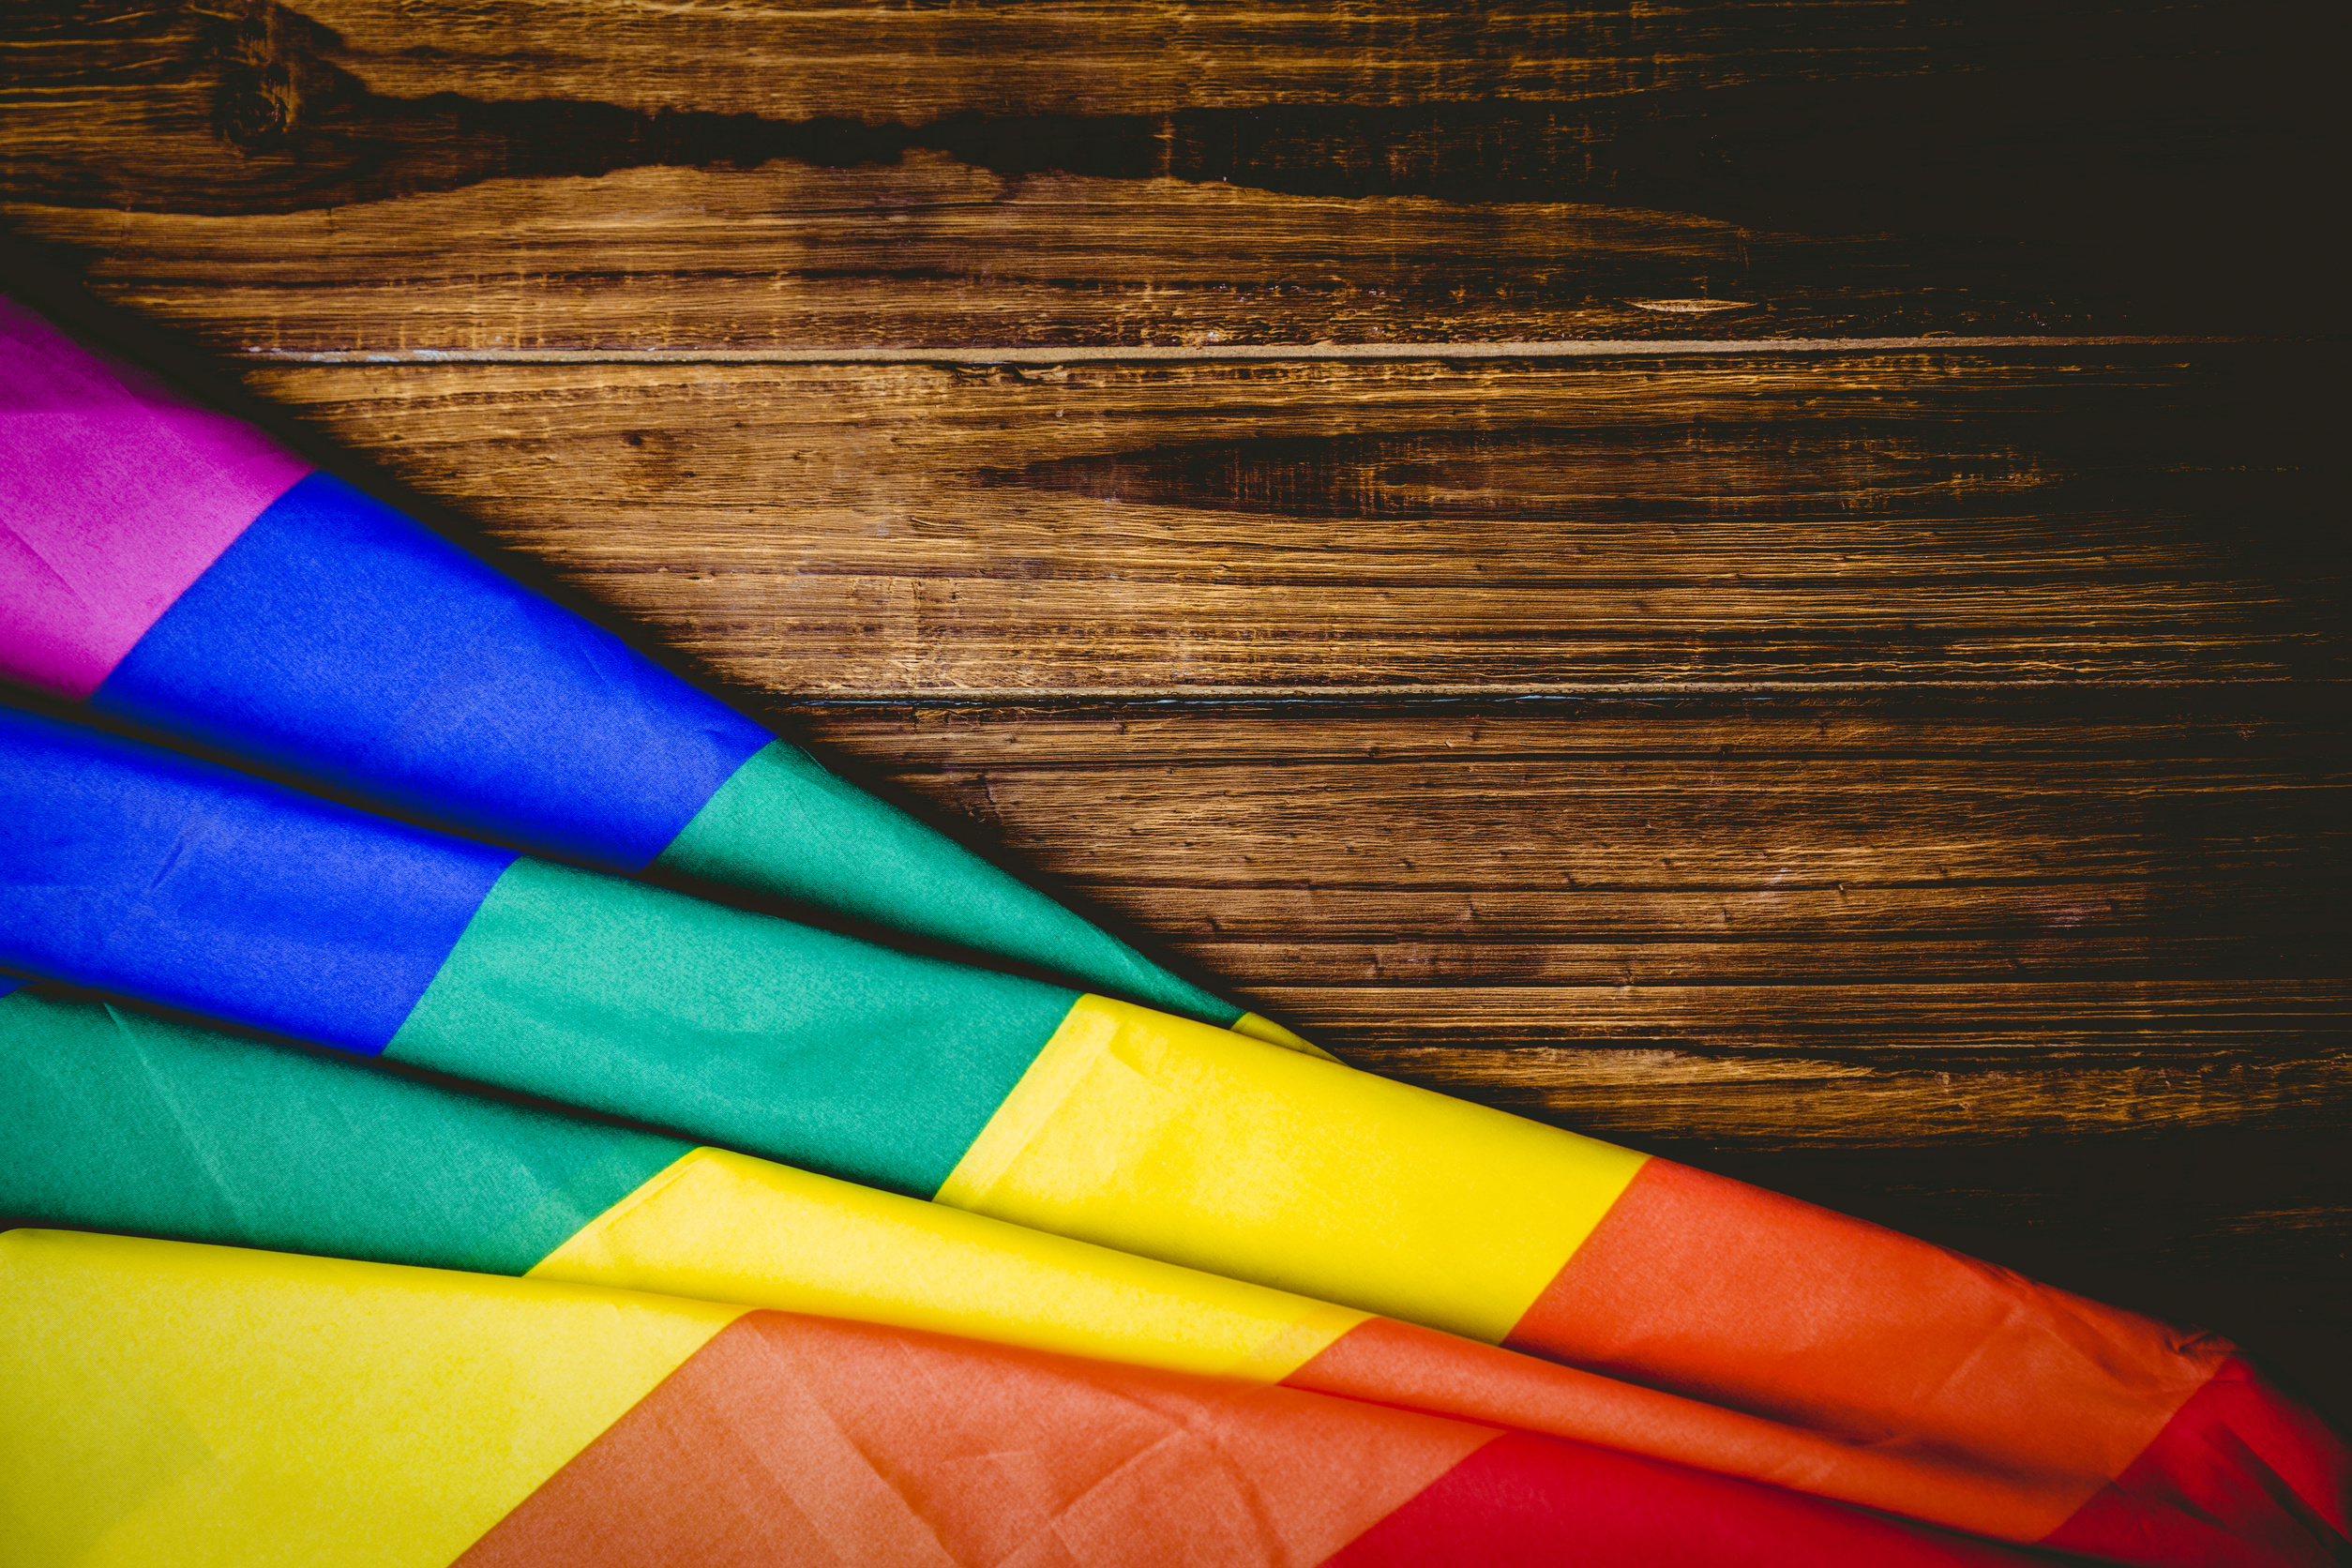 Gay pride flag on wooden table shot in studio